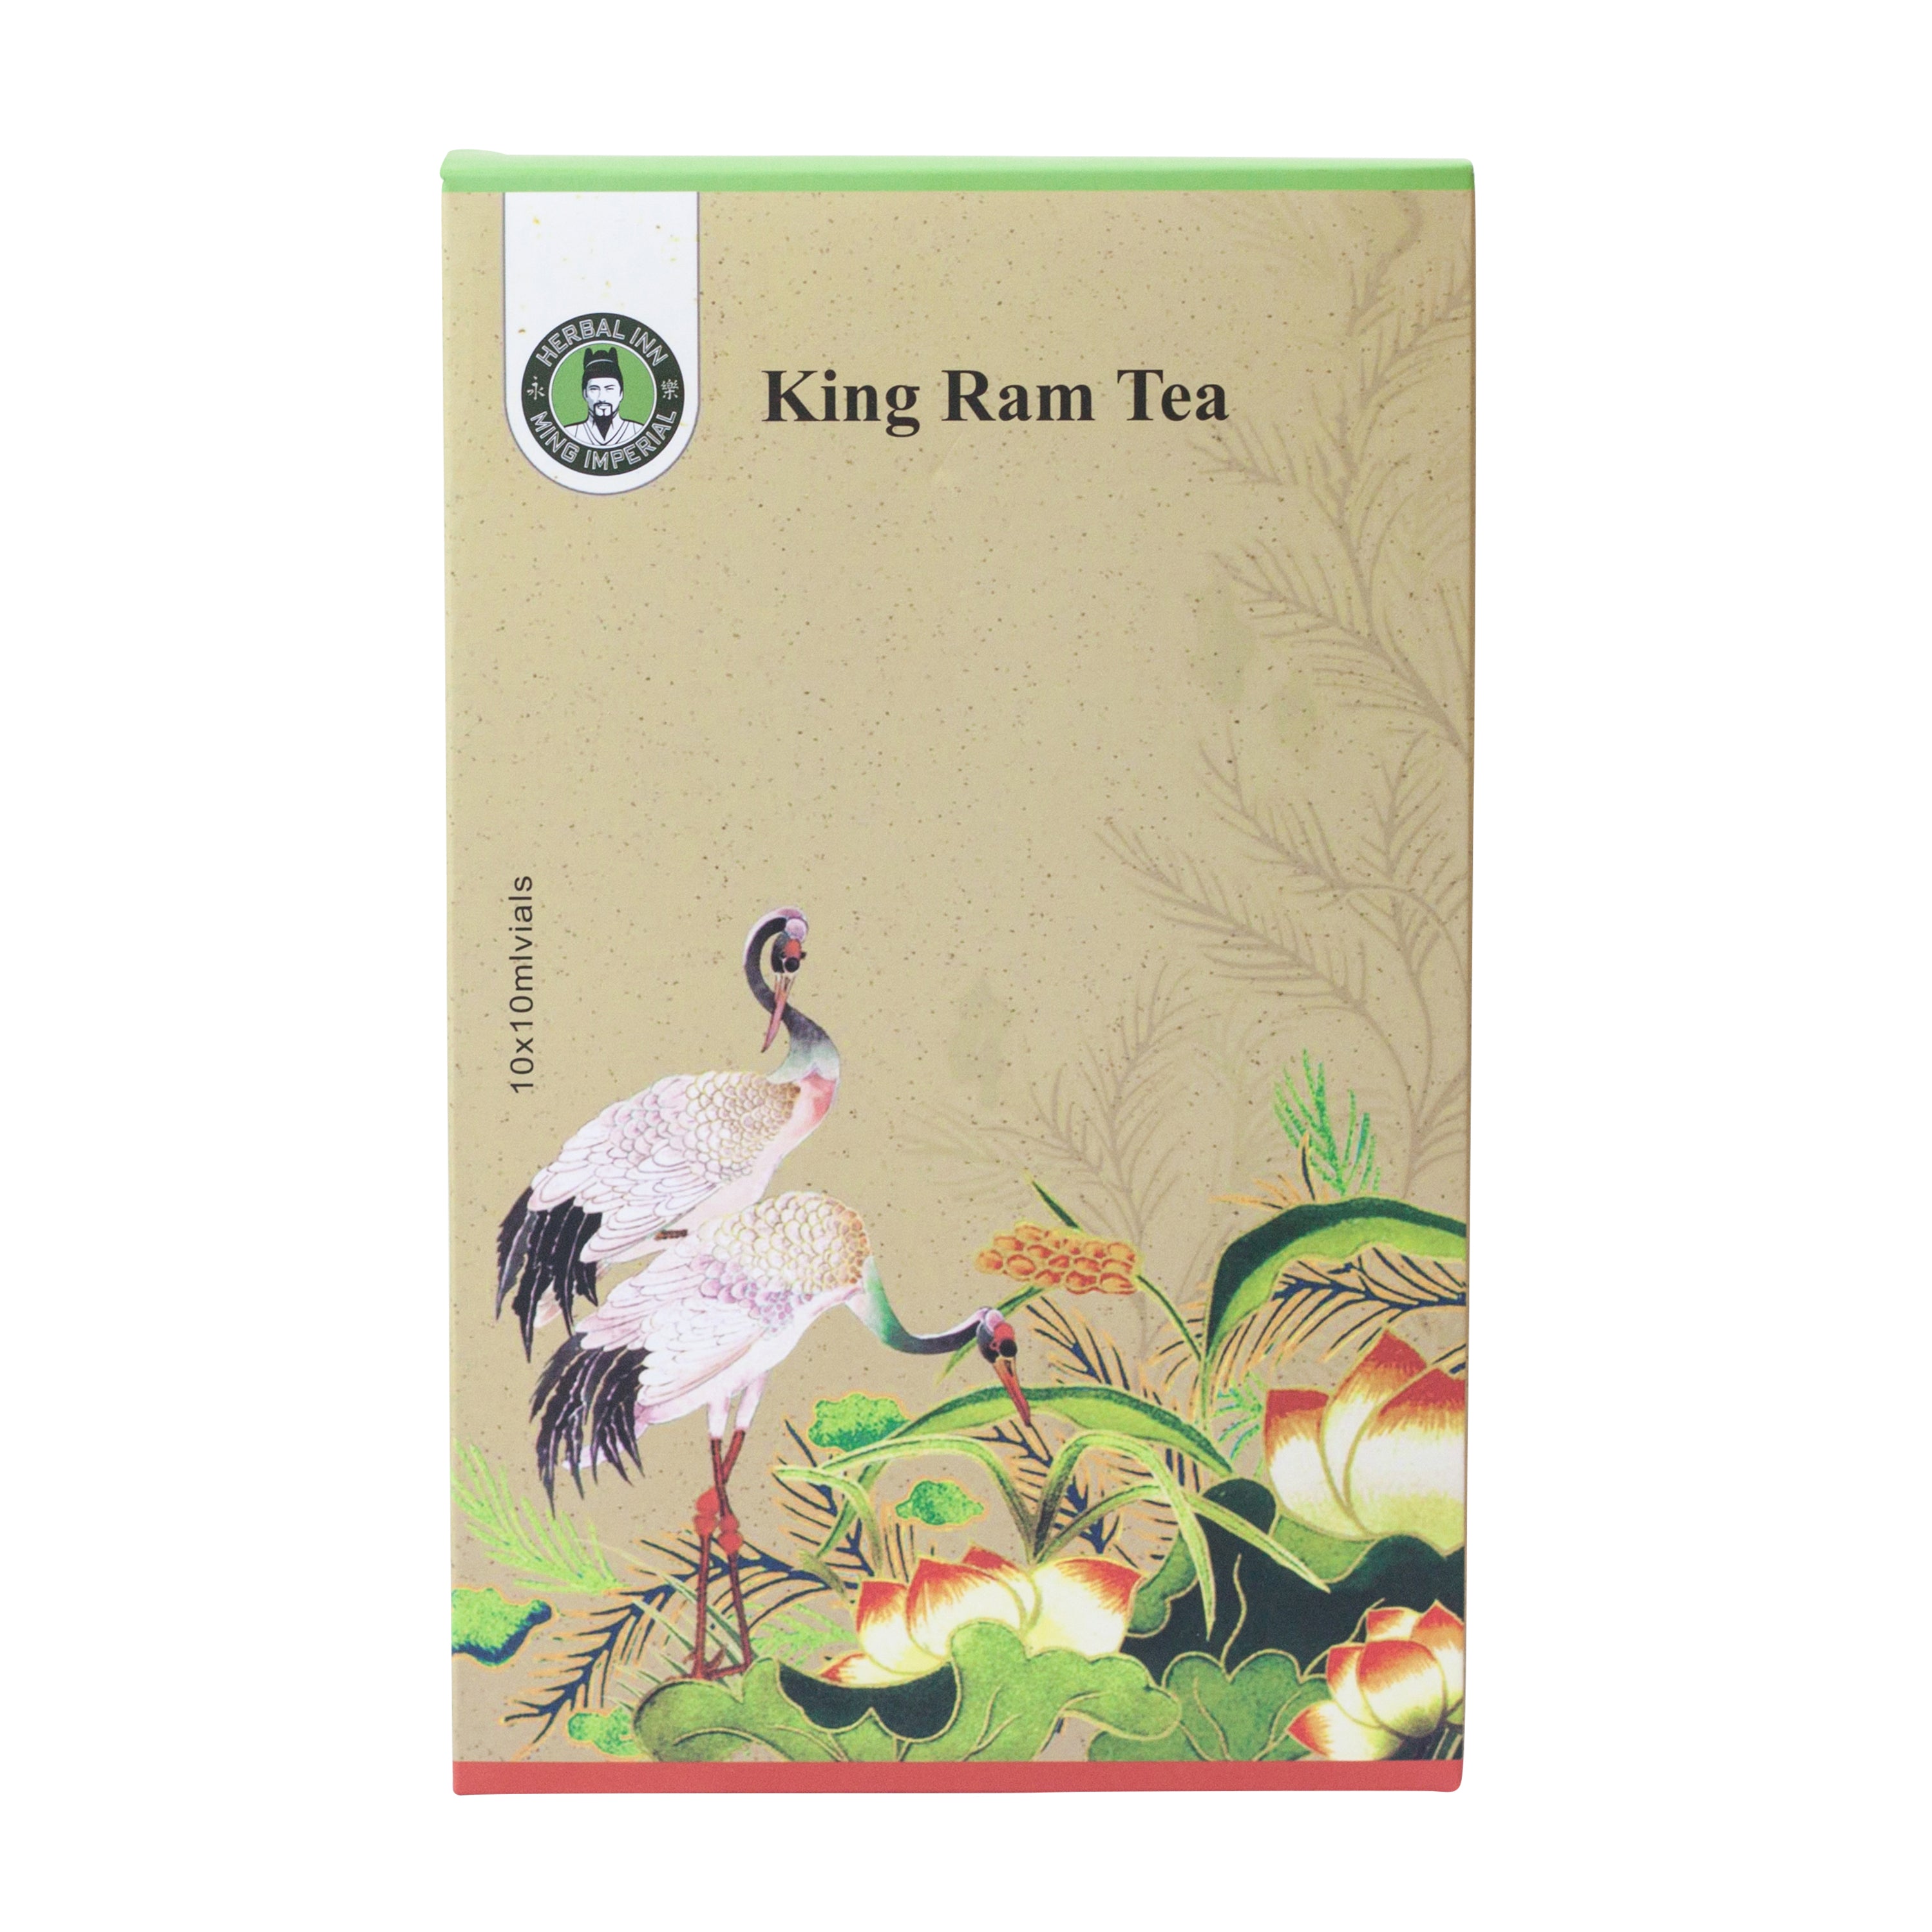 King Ram Tea